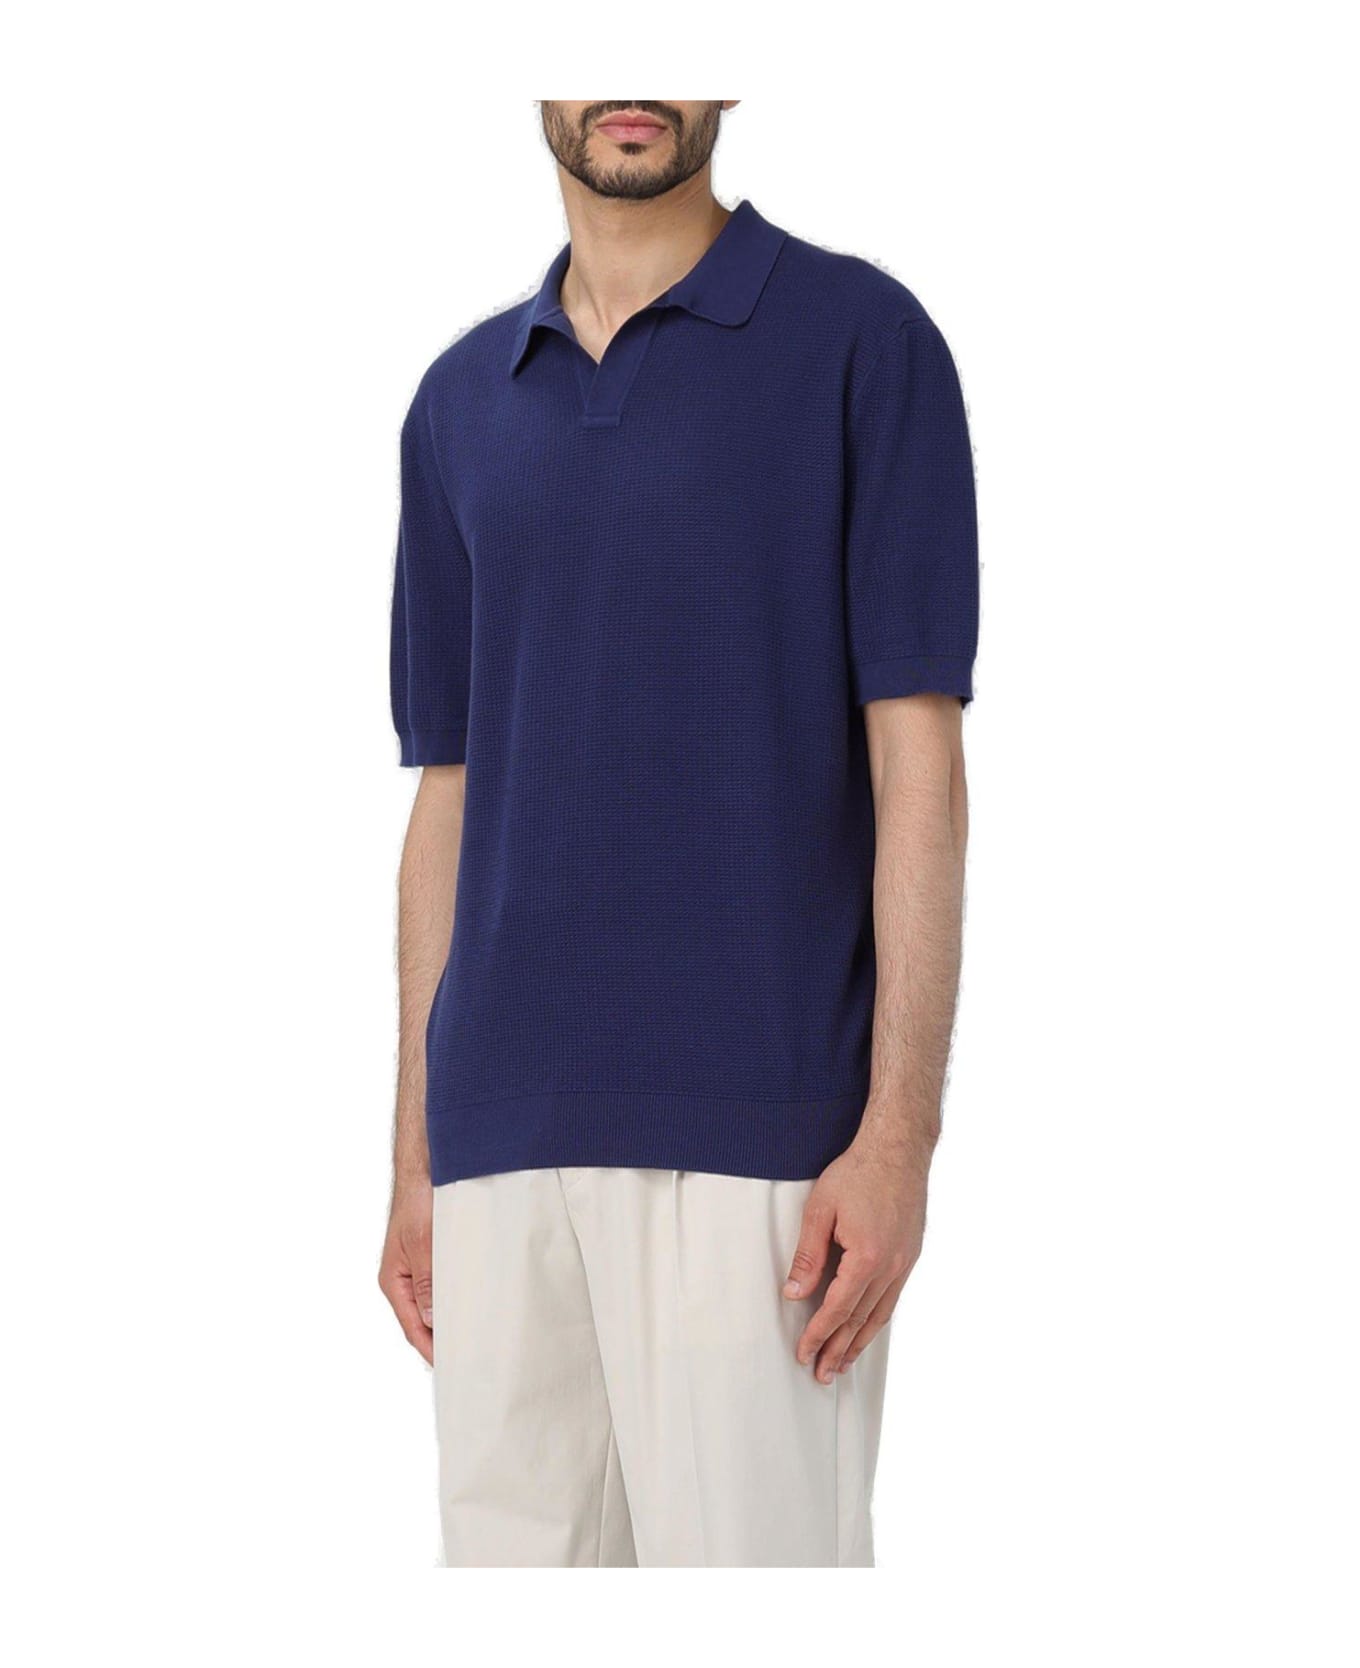 Zegna Short Sleeved Knitted Polo Shirt Zegna - MEDIUM BLUE